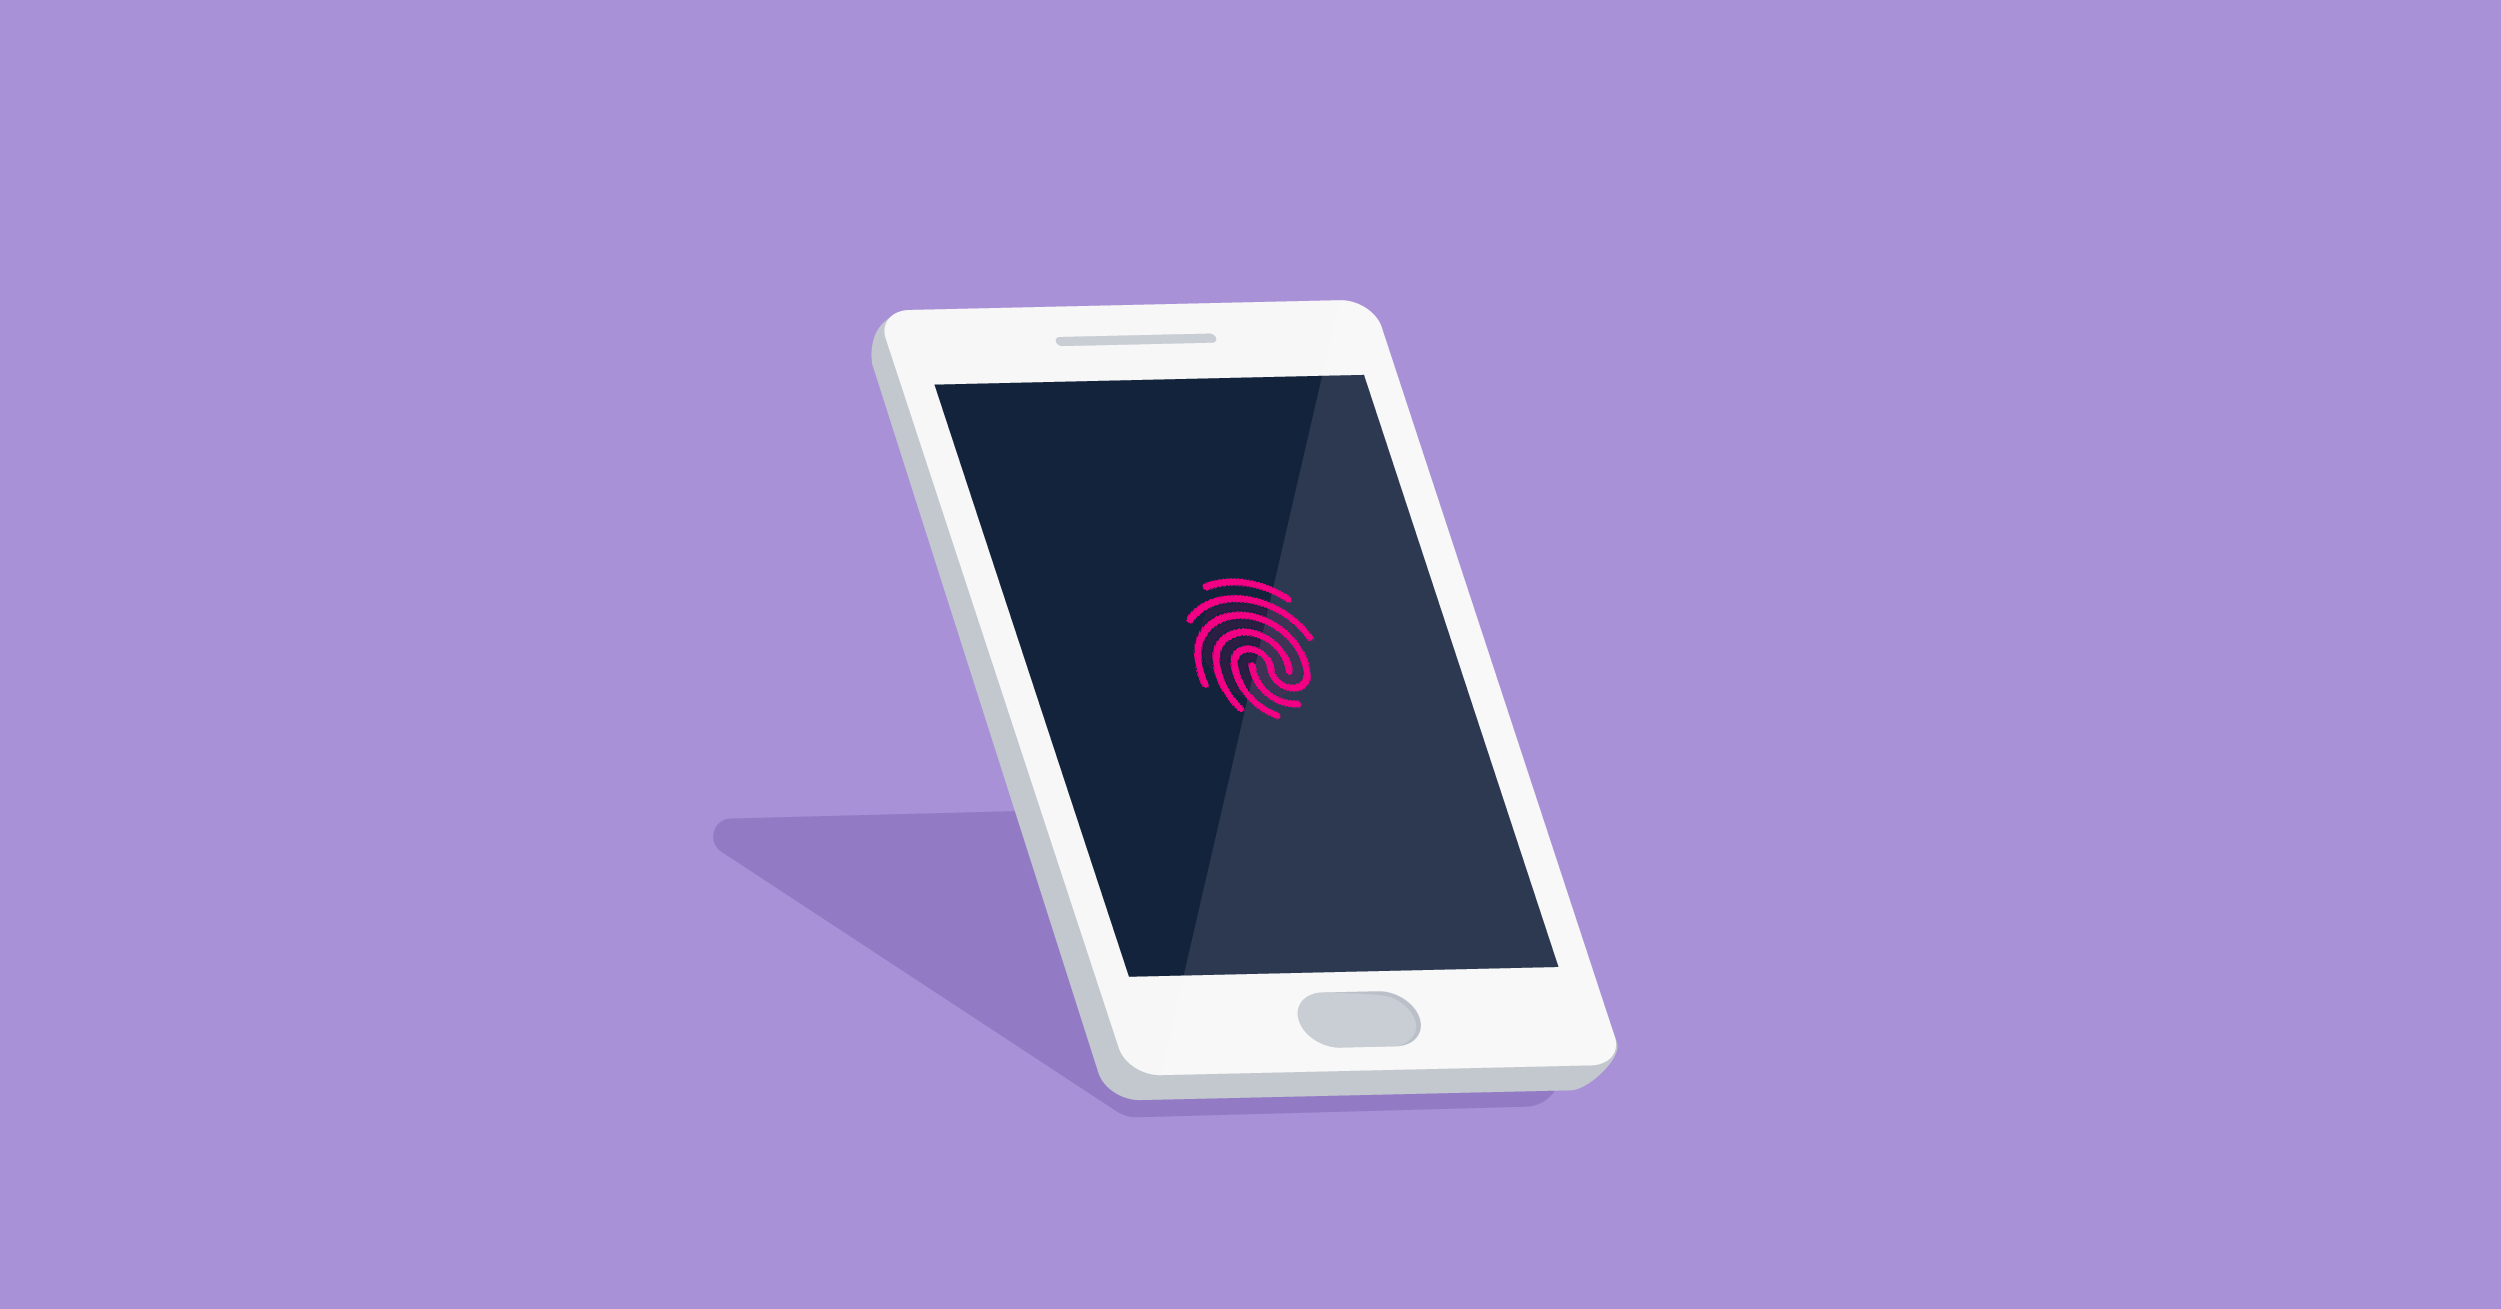 Illustration of a phone and fingerprint